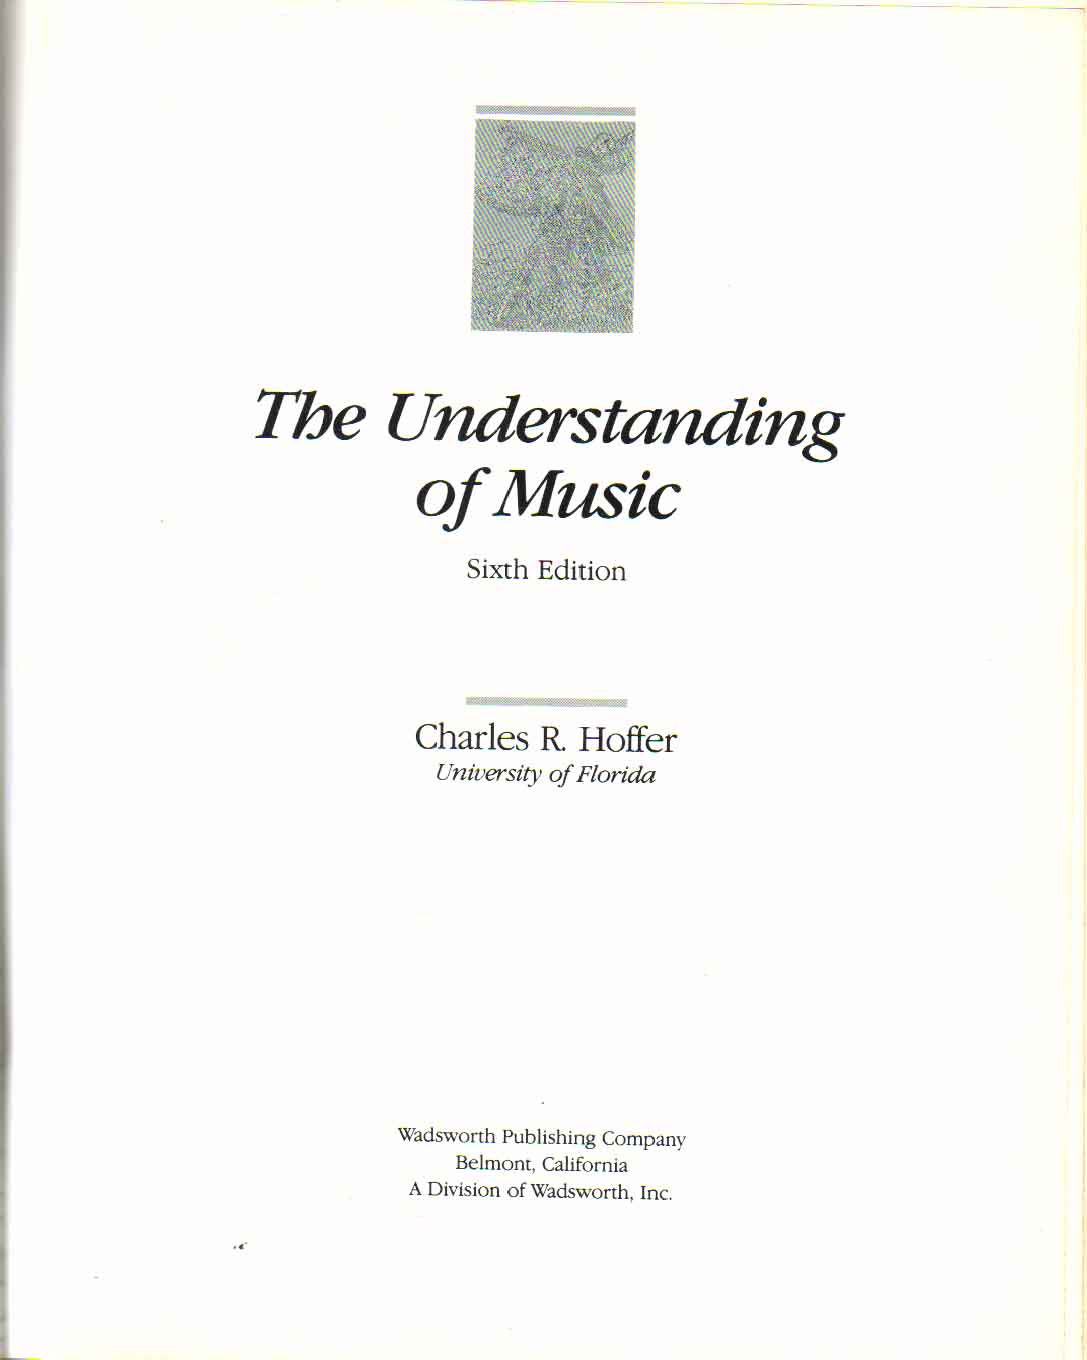 The Understanding of Music